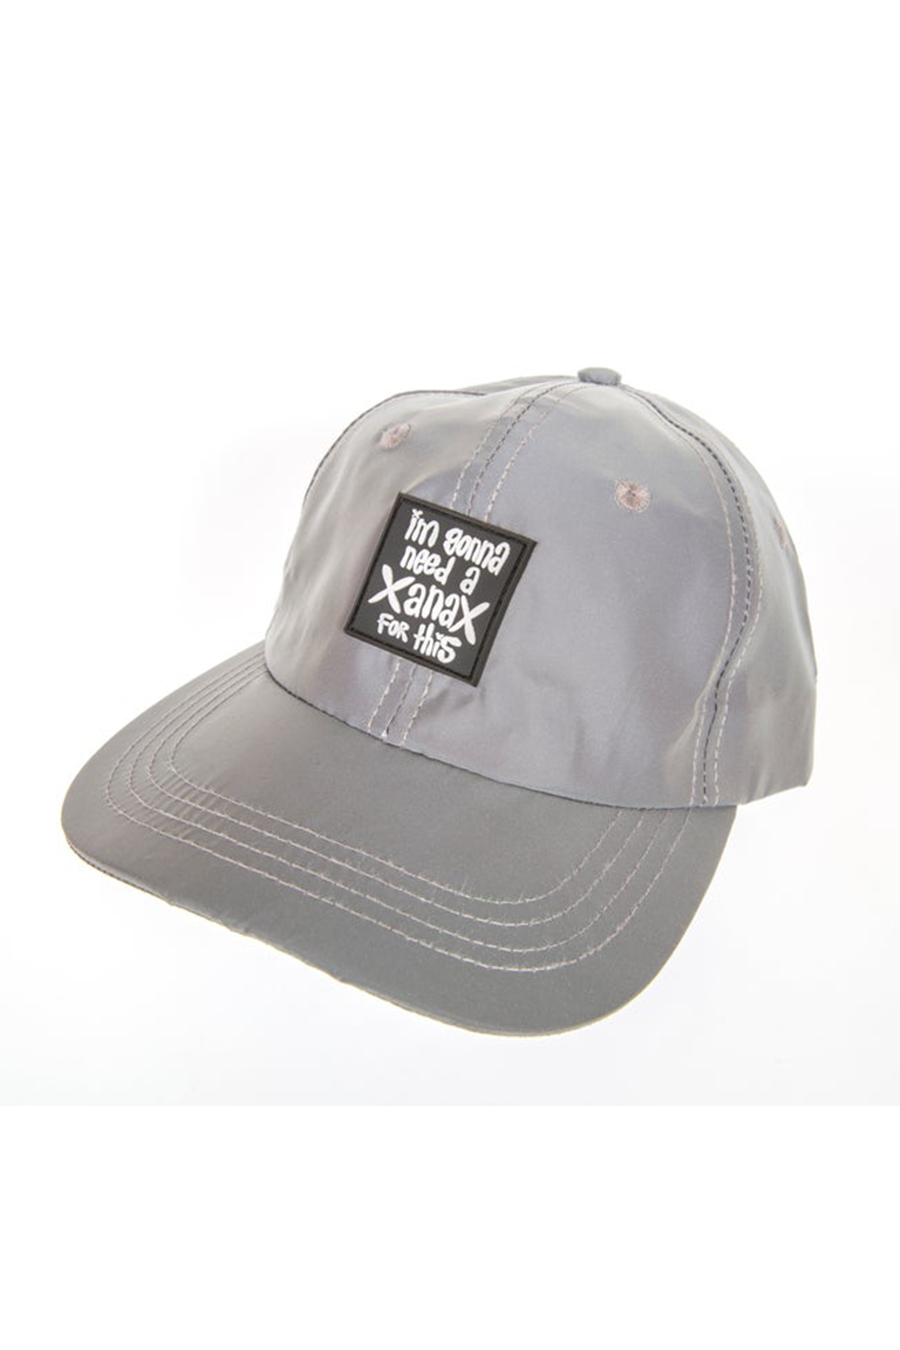 Dirt Cobain Xanax Reflective Hat | Grey - Main Image Number 1 of 2